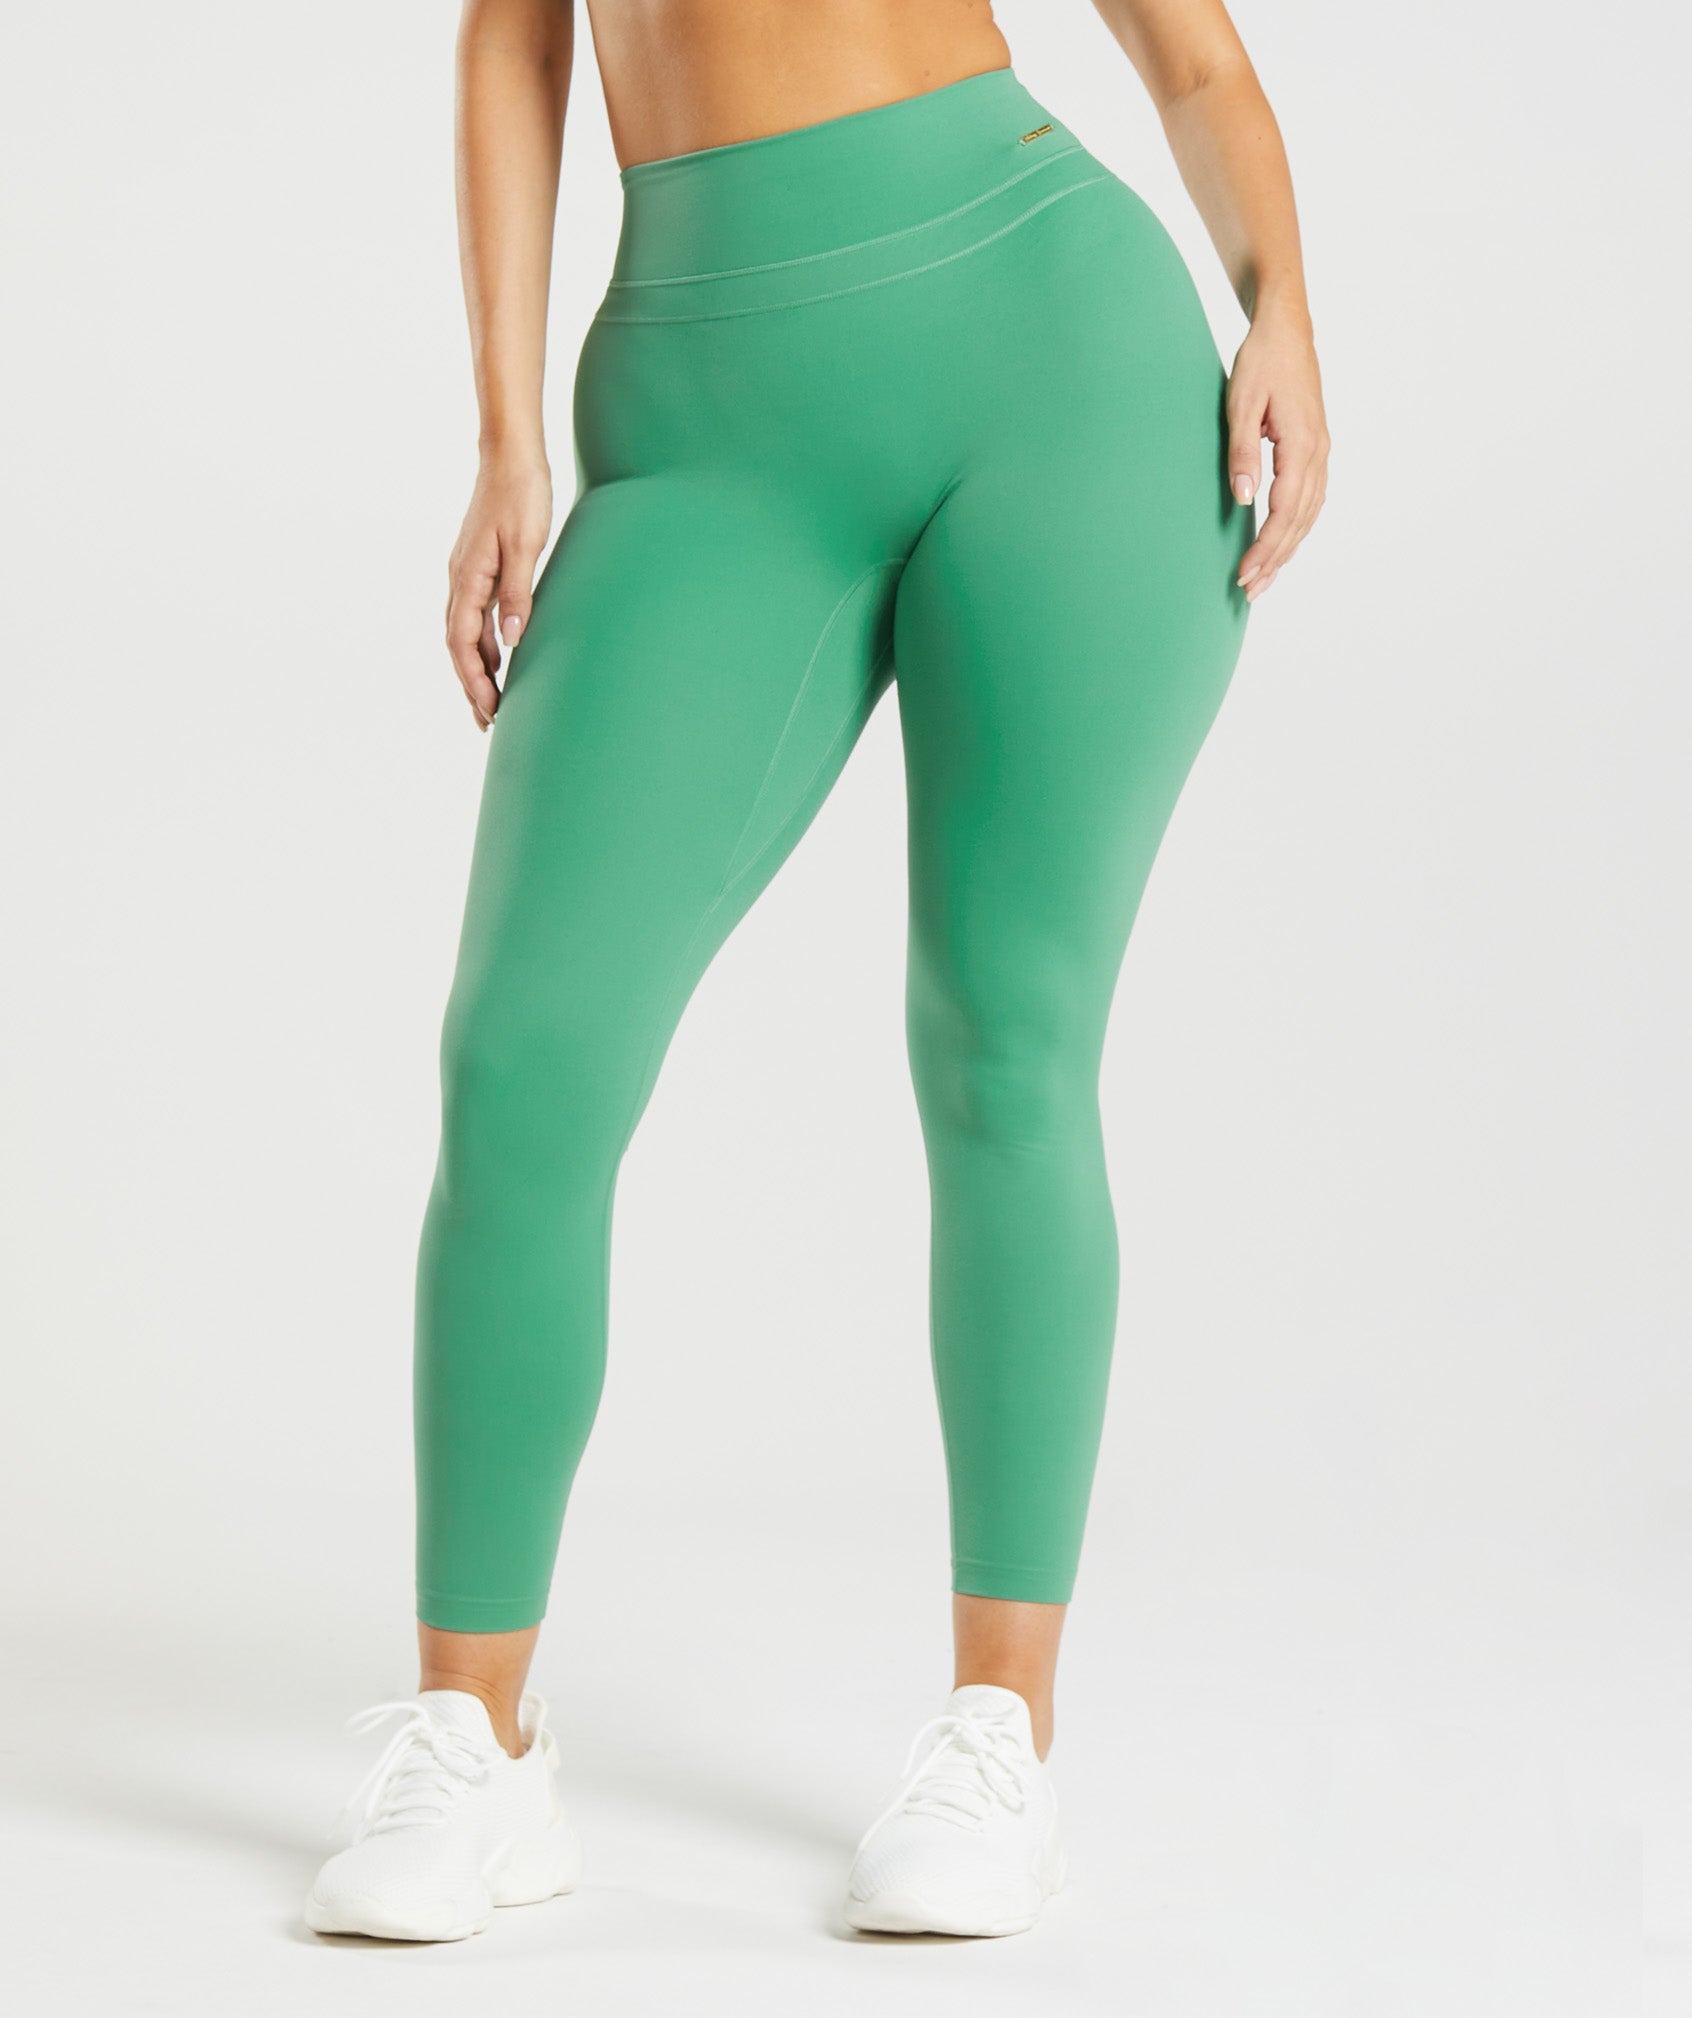 GYMSHARK Green Compression leggings full length size small